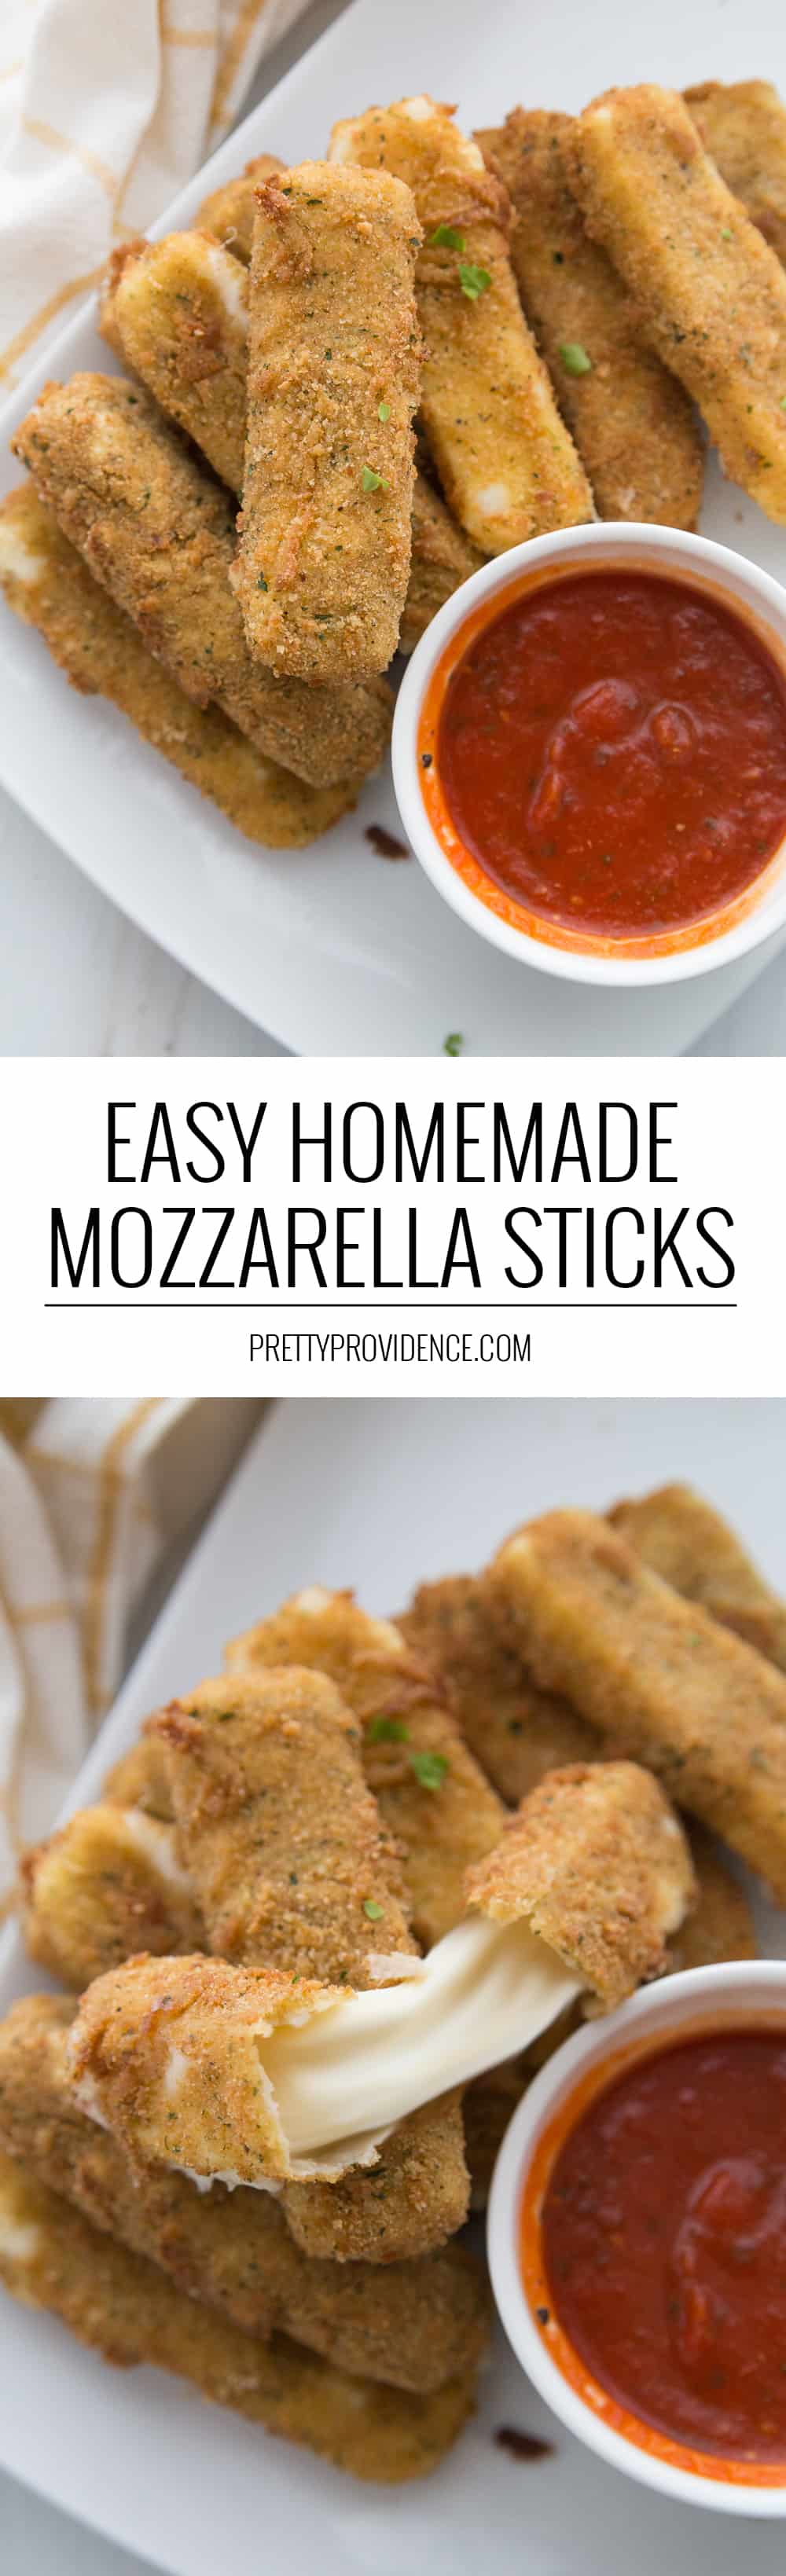 Easy Homemade Mozzarella Sticks AKA: Cheese Sticks